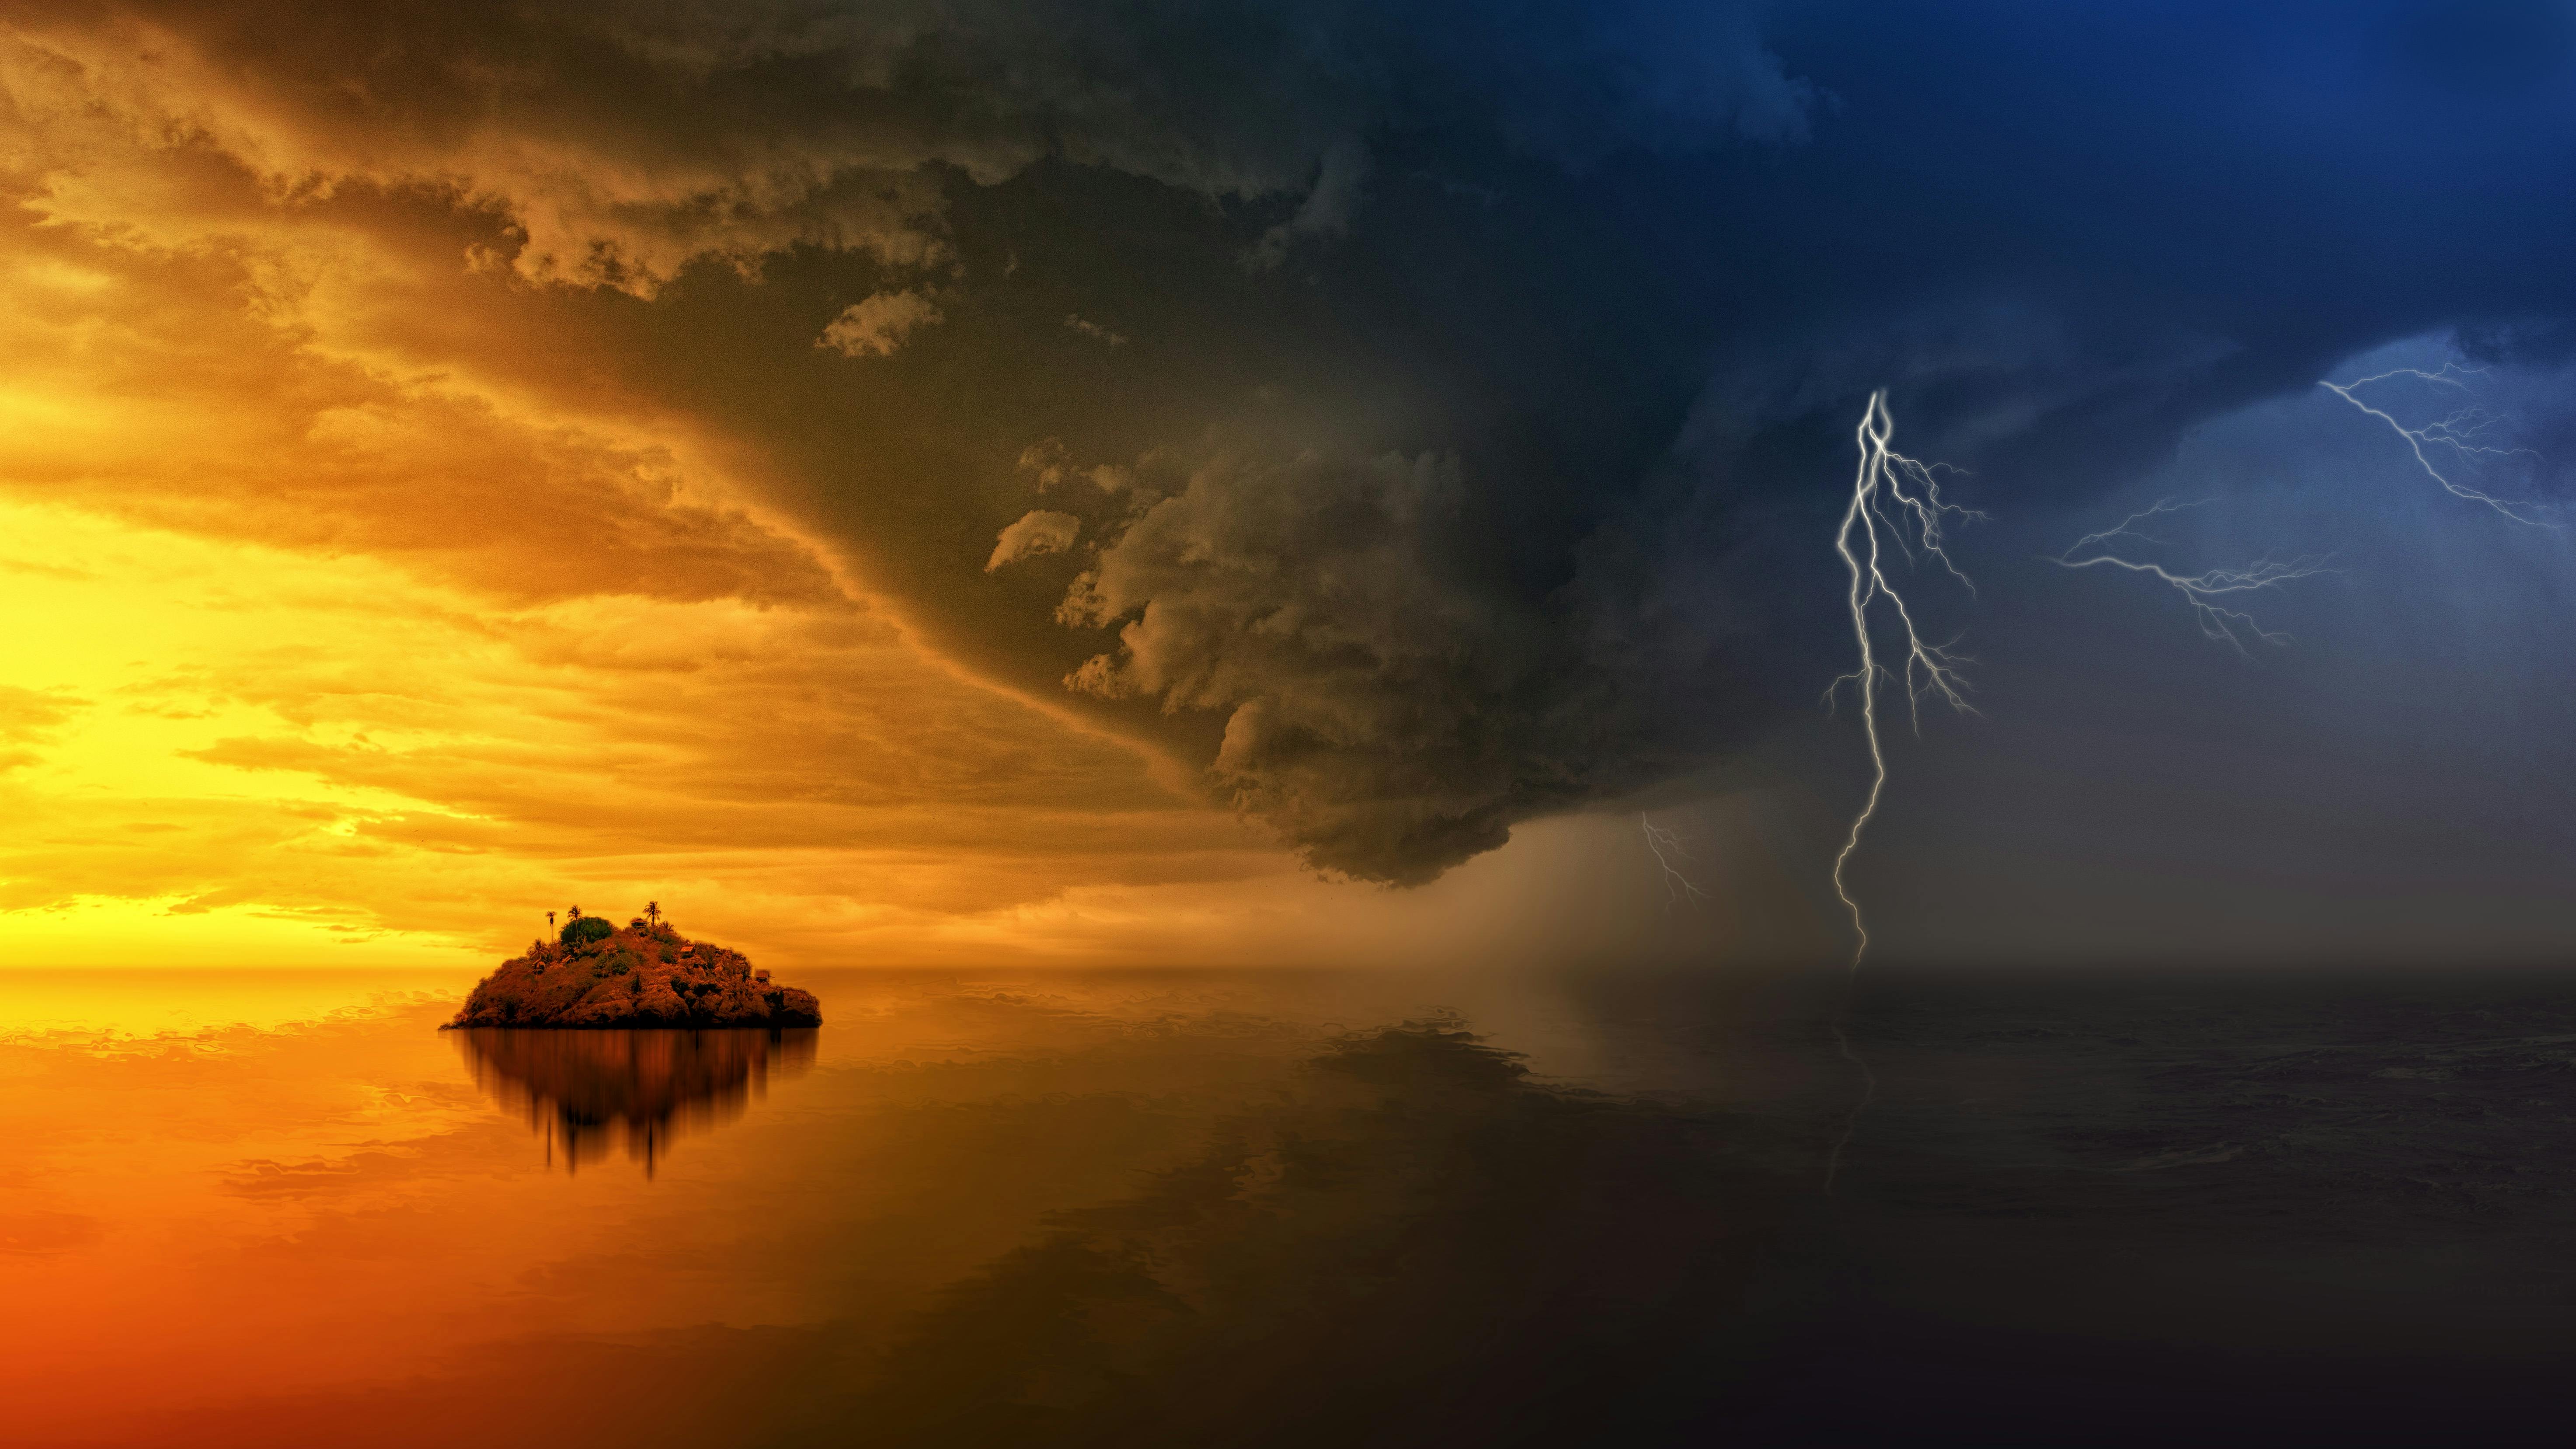 Thunderstorm Desktop Wallpaper 61 images